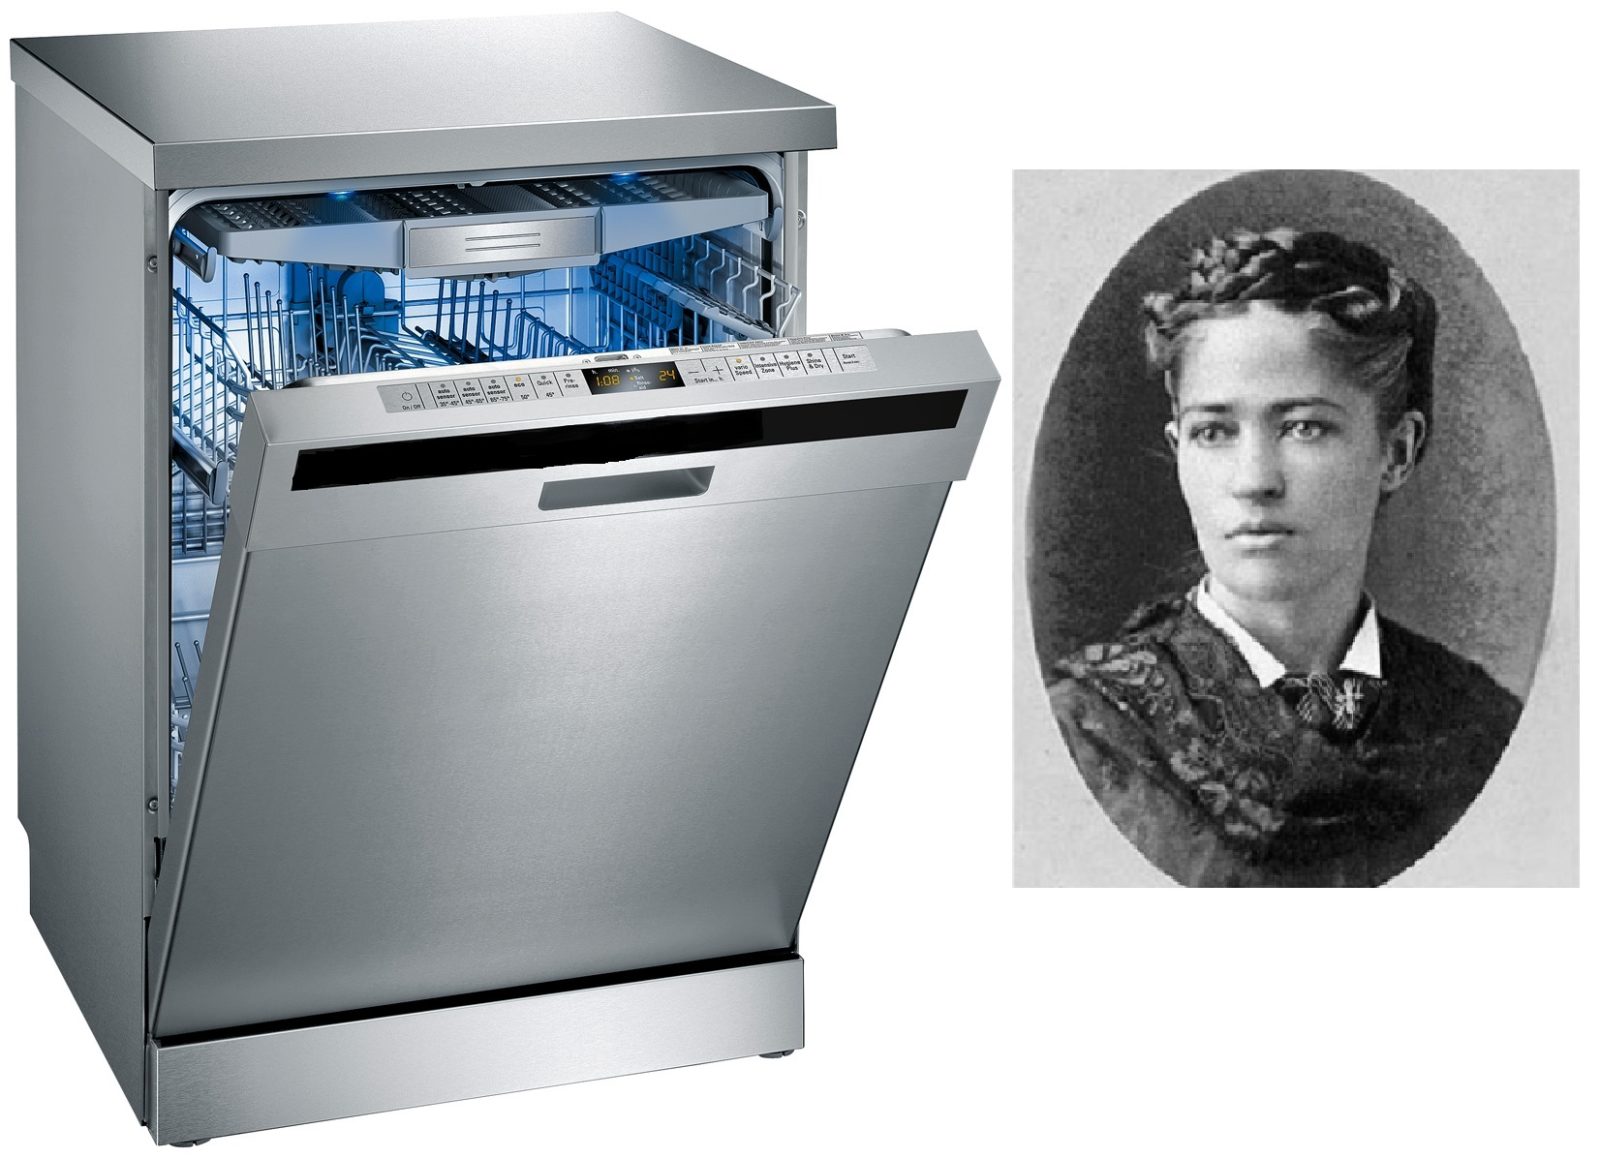 Hvem opfandt opvaskemaskinen?